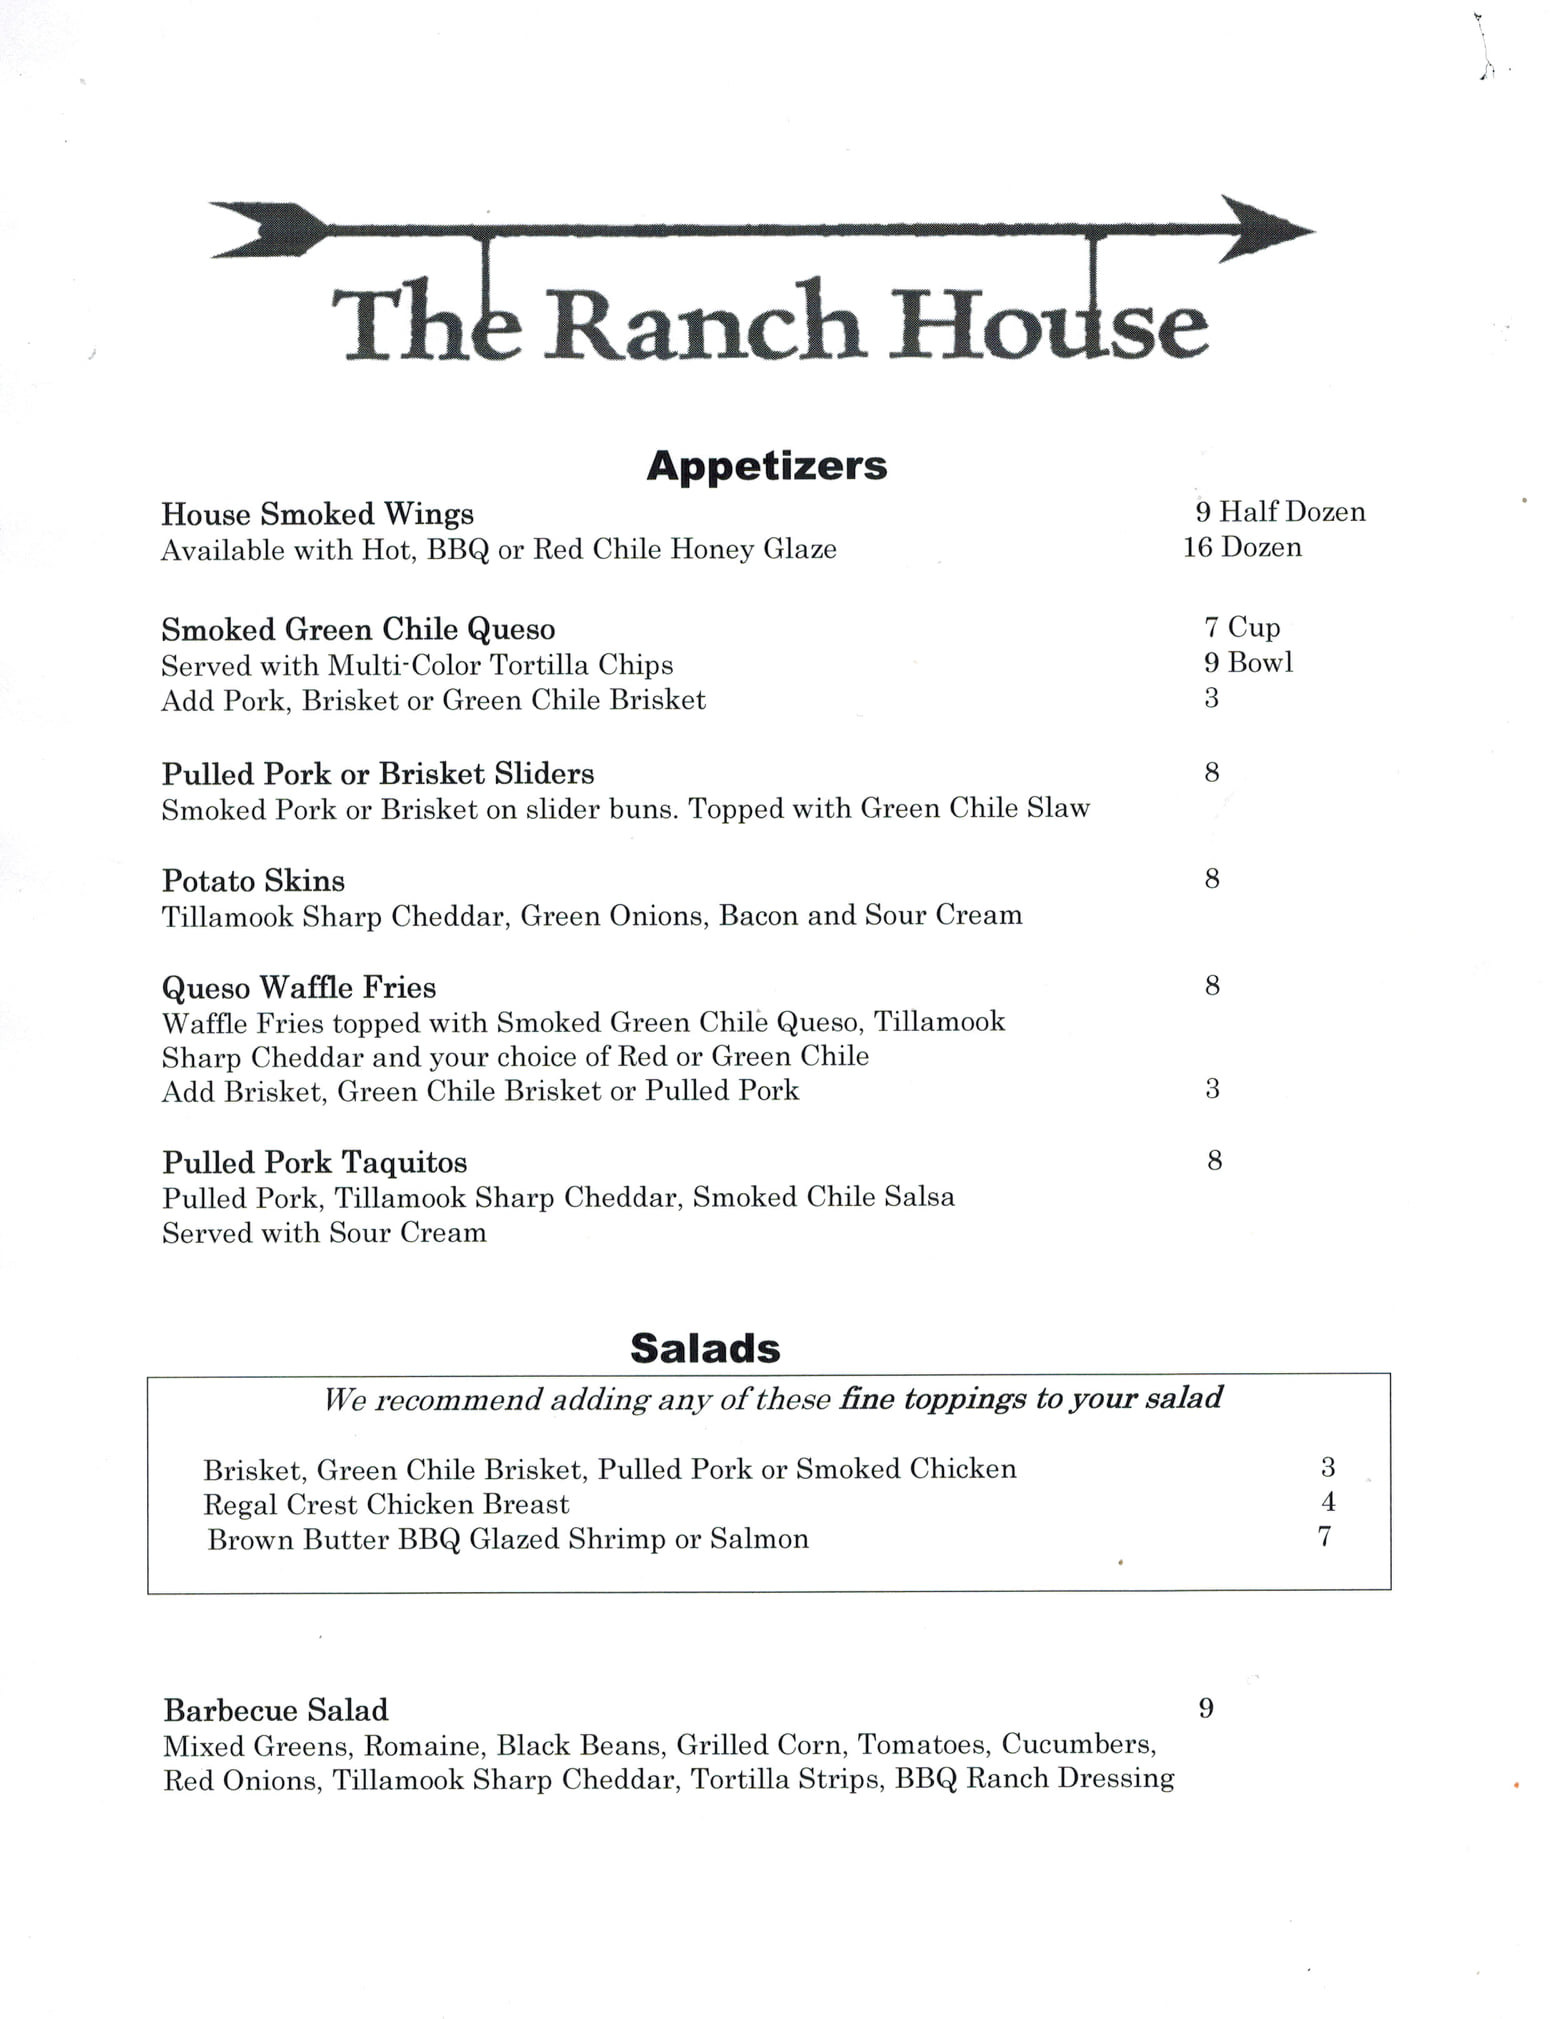 The Ranch House Menu